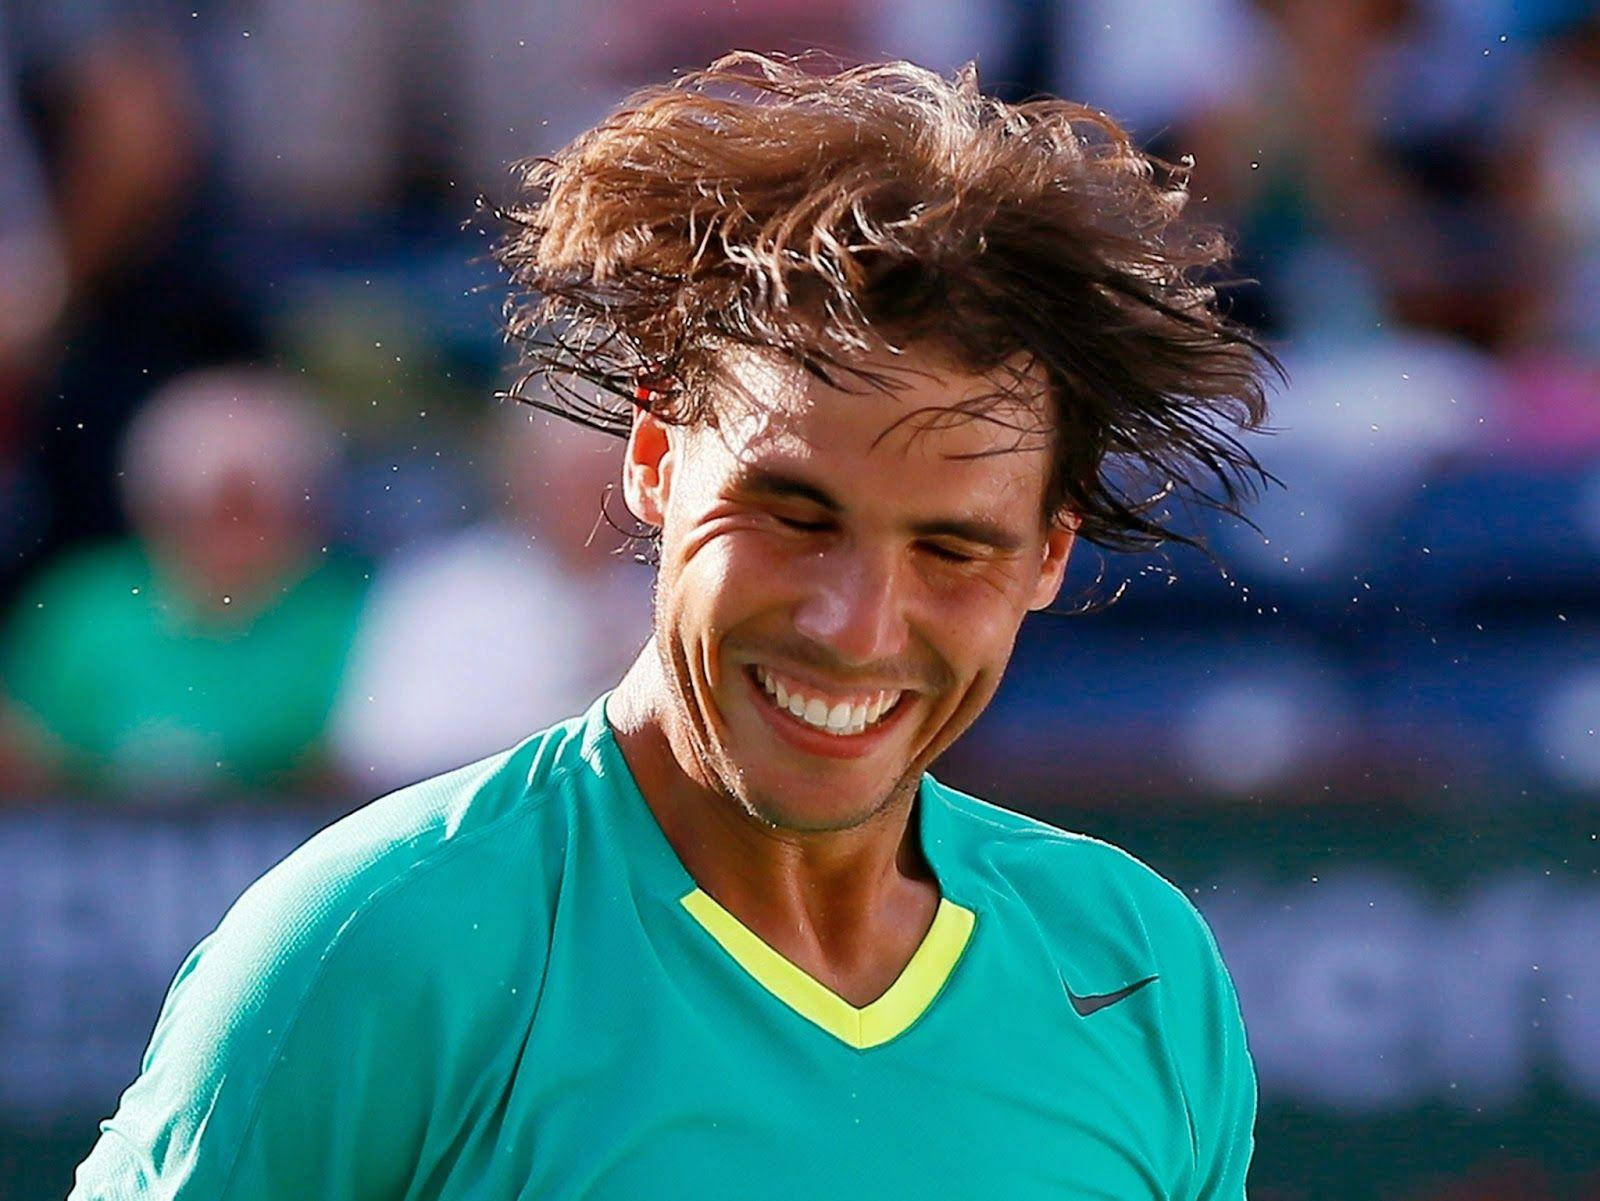 French Open Smiling Rafael Nadal Wallpaper